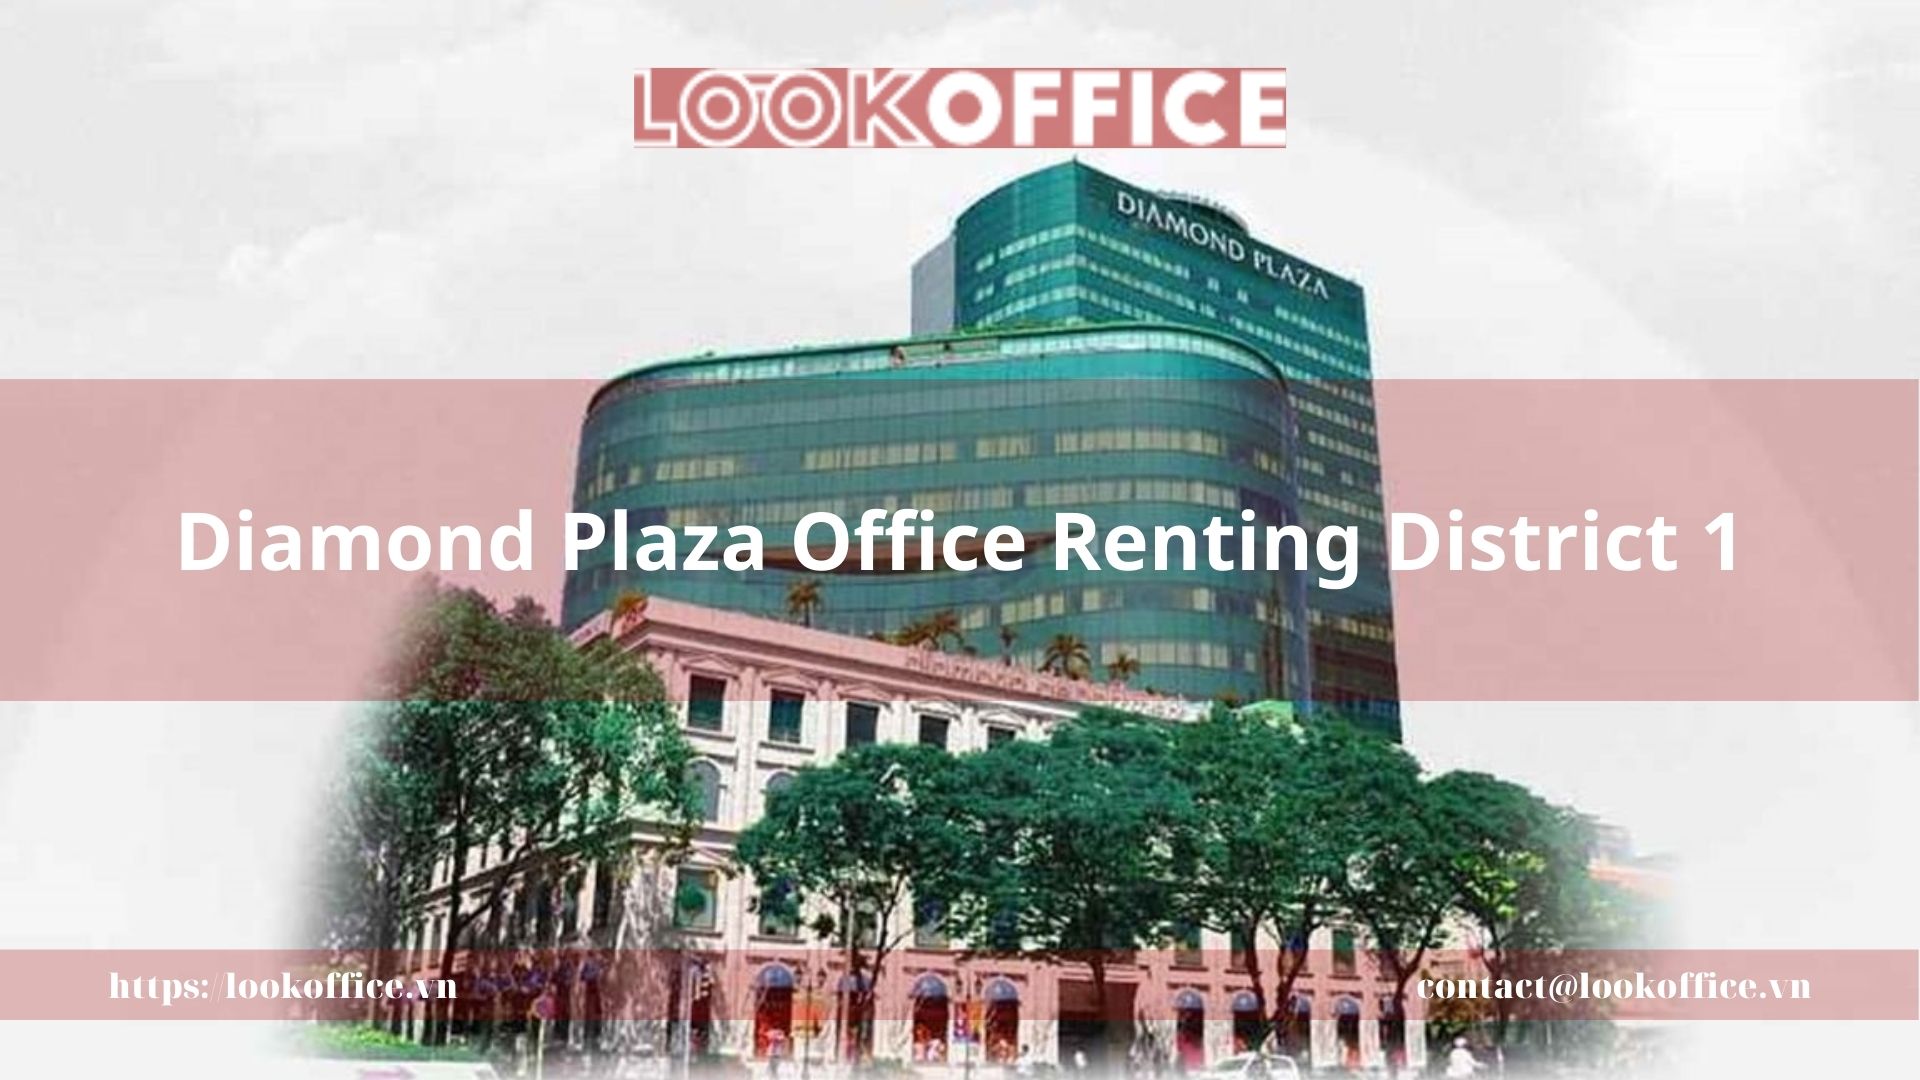 Diamond Plaza Office Renting District 1